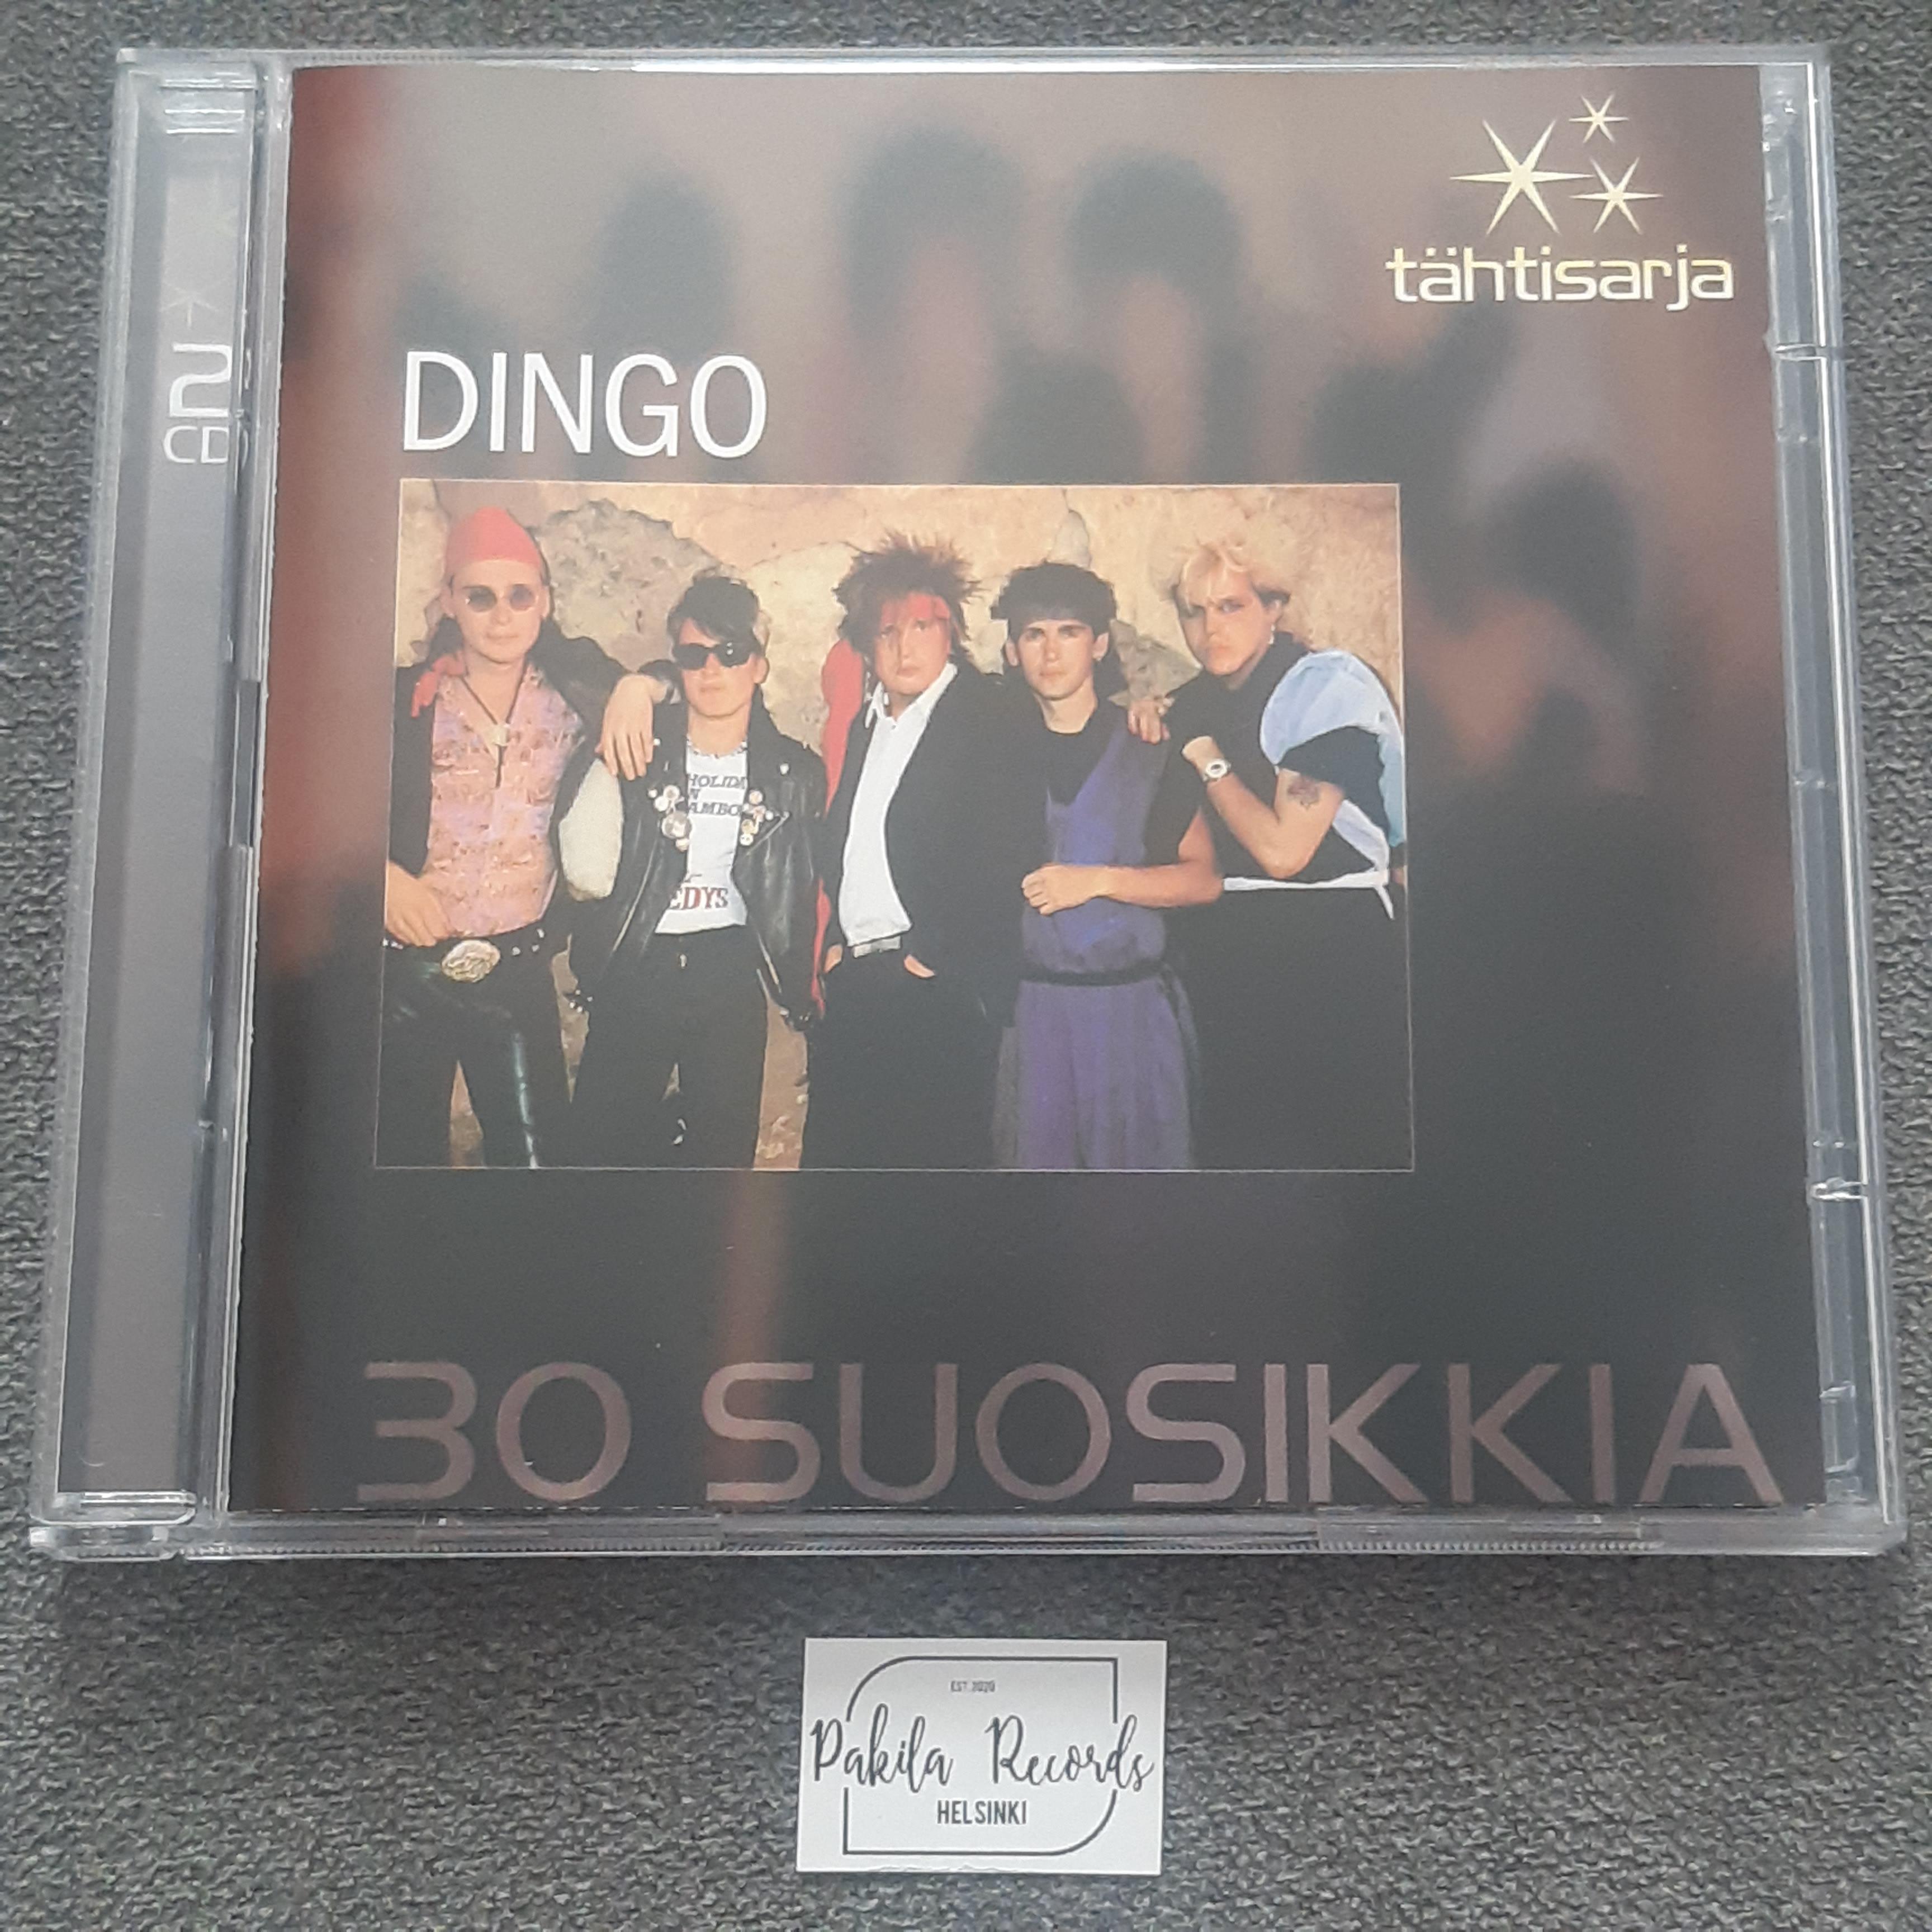 Dingo - 30 suosikkia - 2 CD (käytetty)